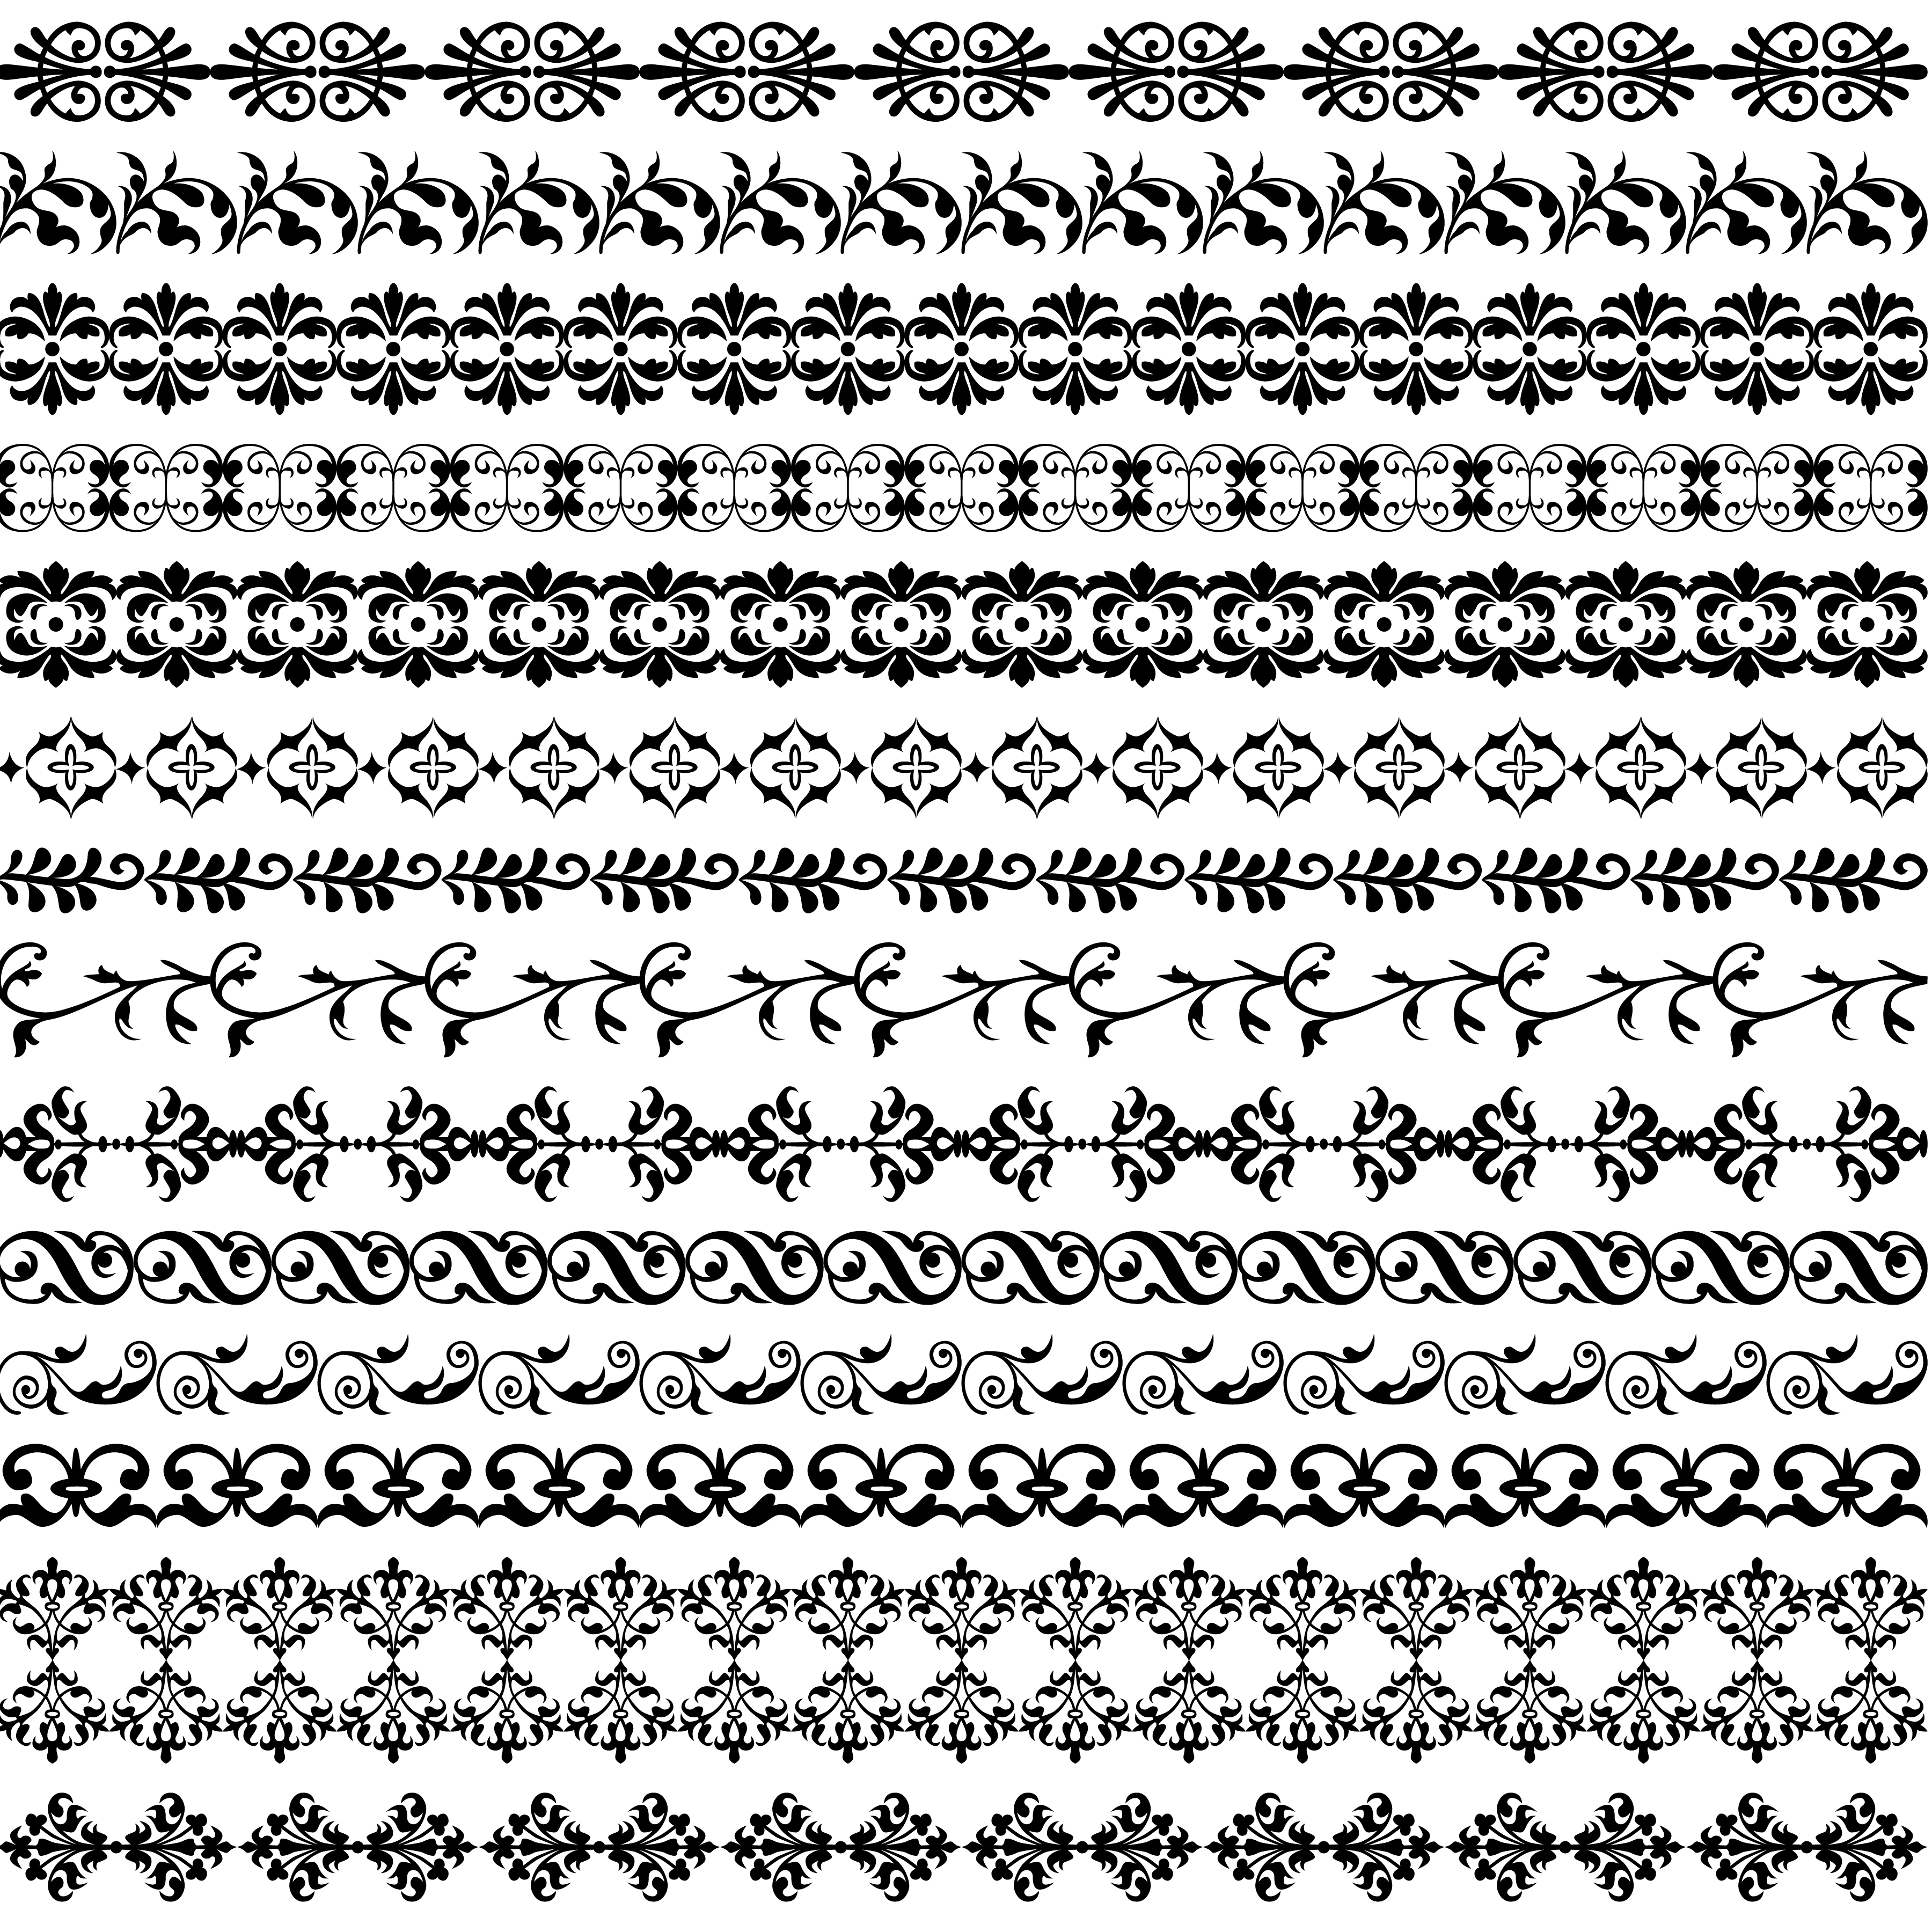 Download black ornate border pattern - Download Free Vectors ...